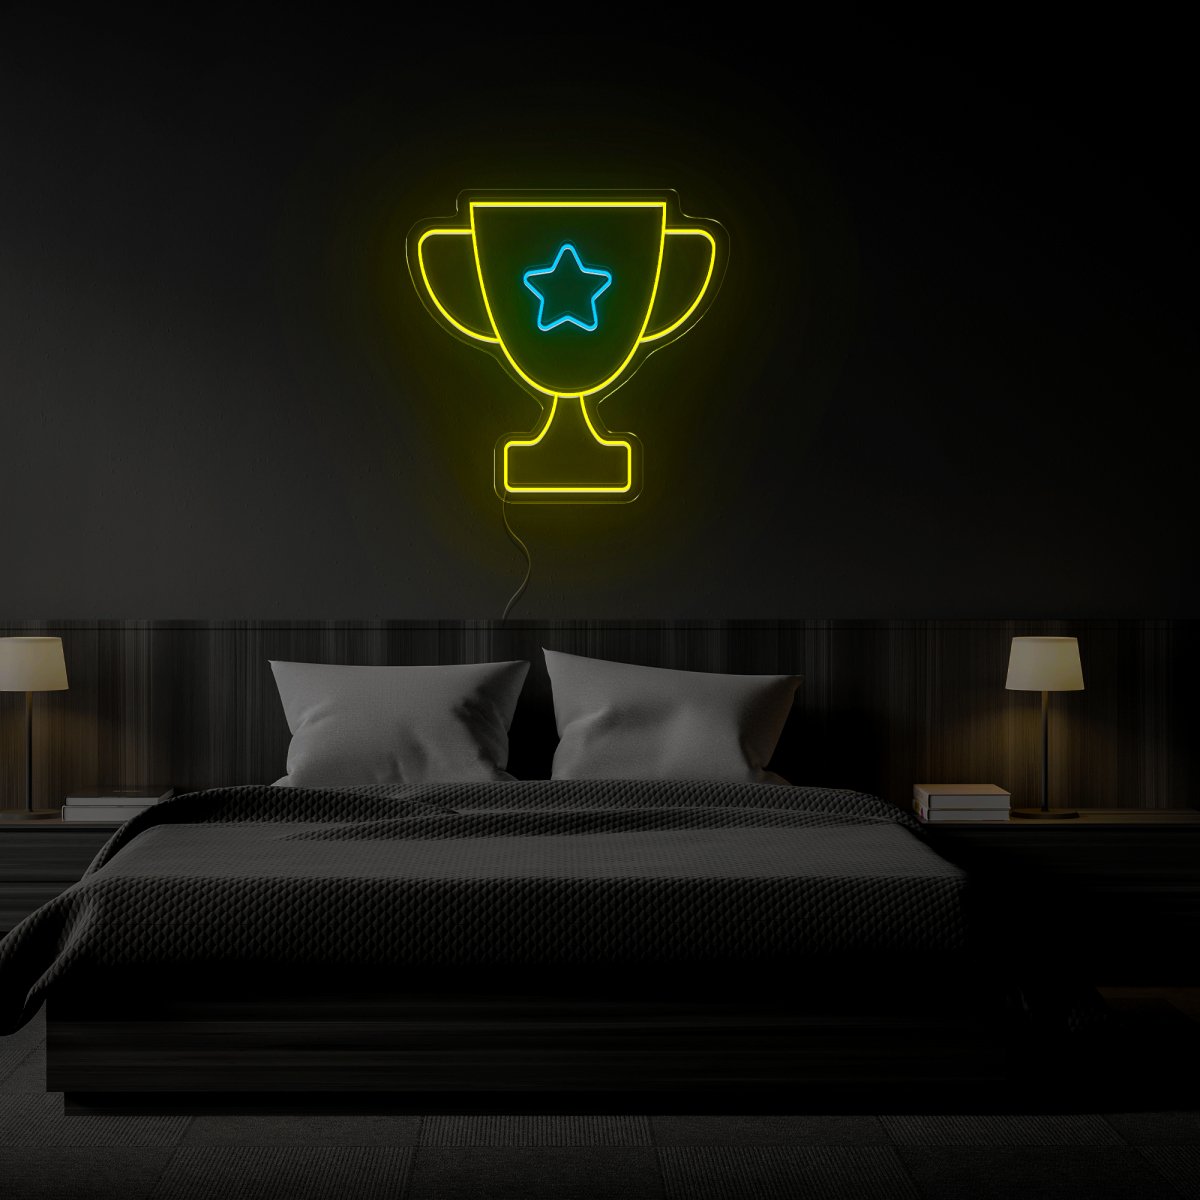 Trophy Cup Neon Sign - Reels Custom